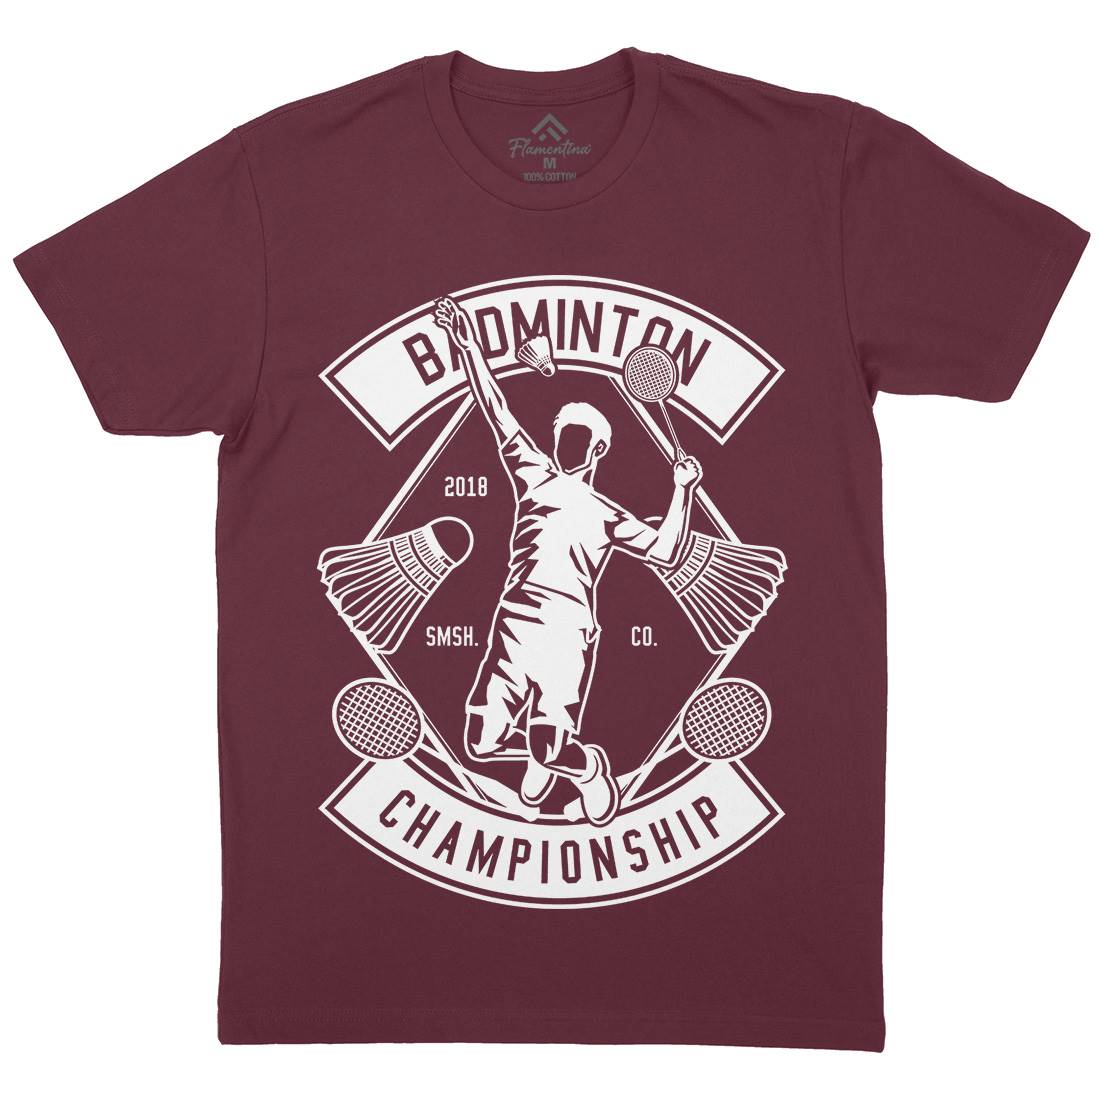 Badminton Championship Mens Organic Crew Neck T-Shirt Sport B486